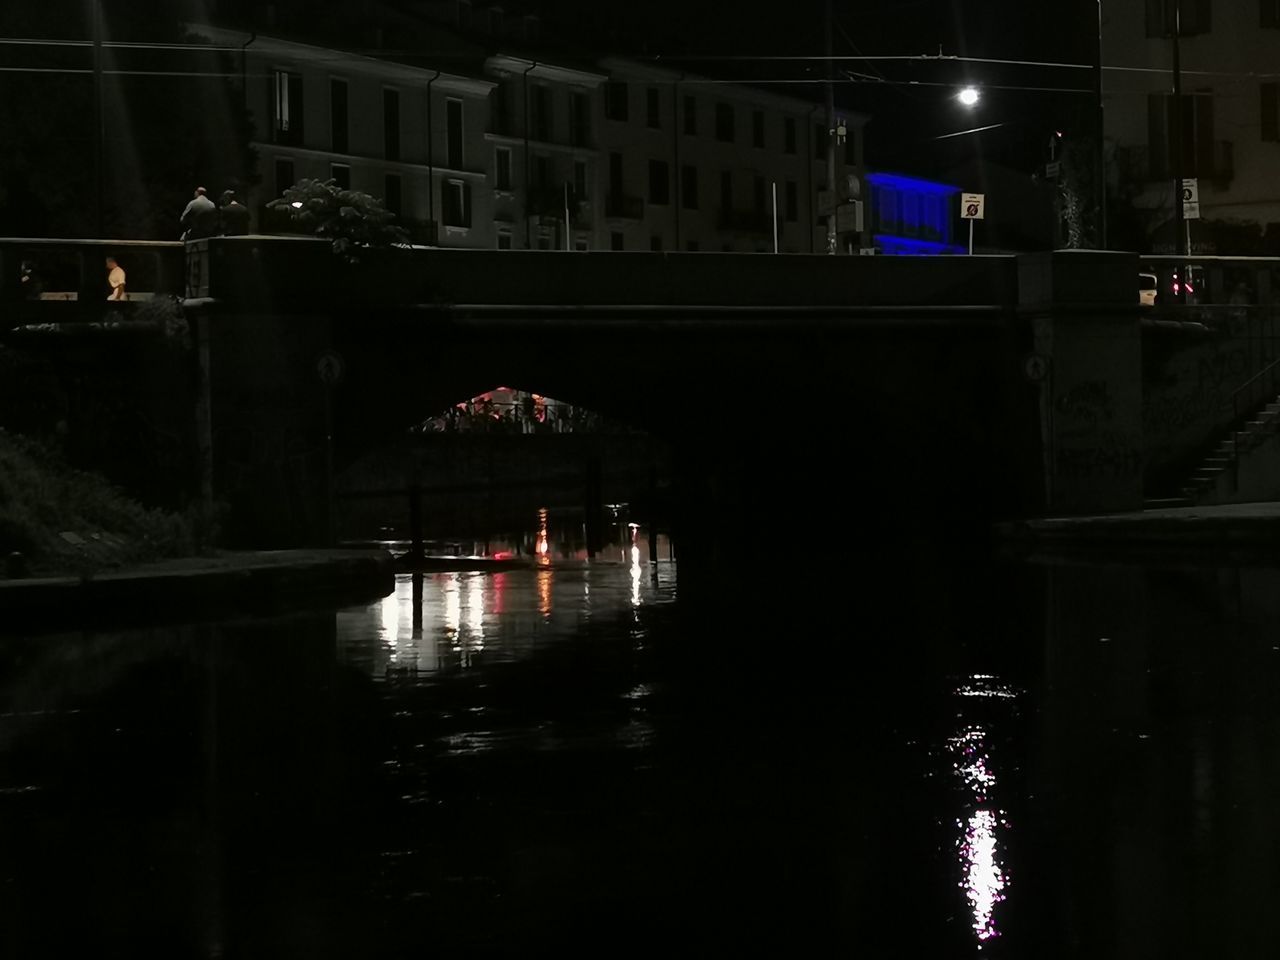 ILLUMINATED BRIDGE OVER RIVER AT NIGHT